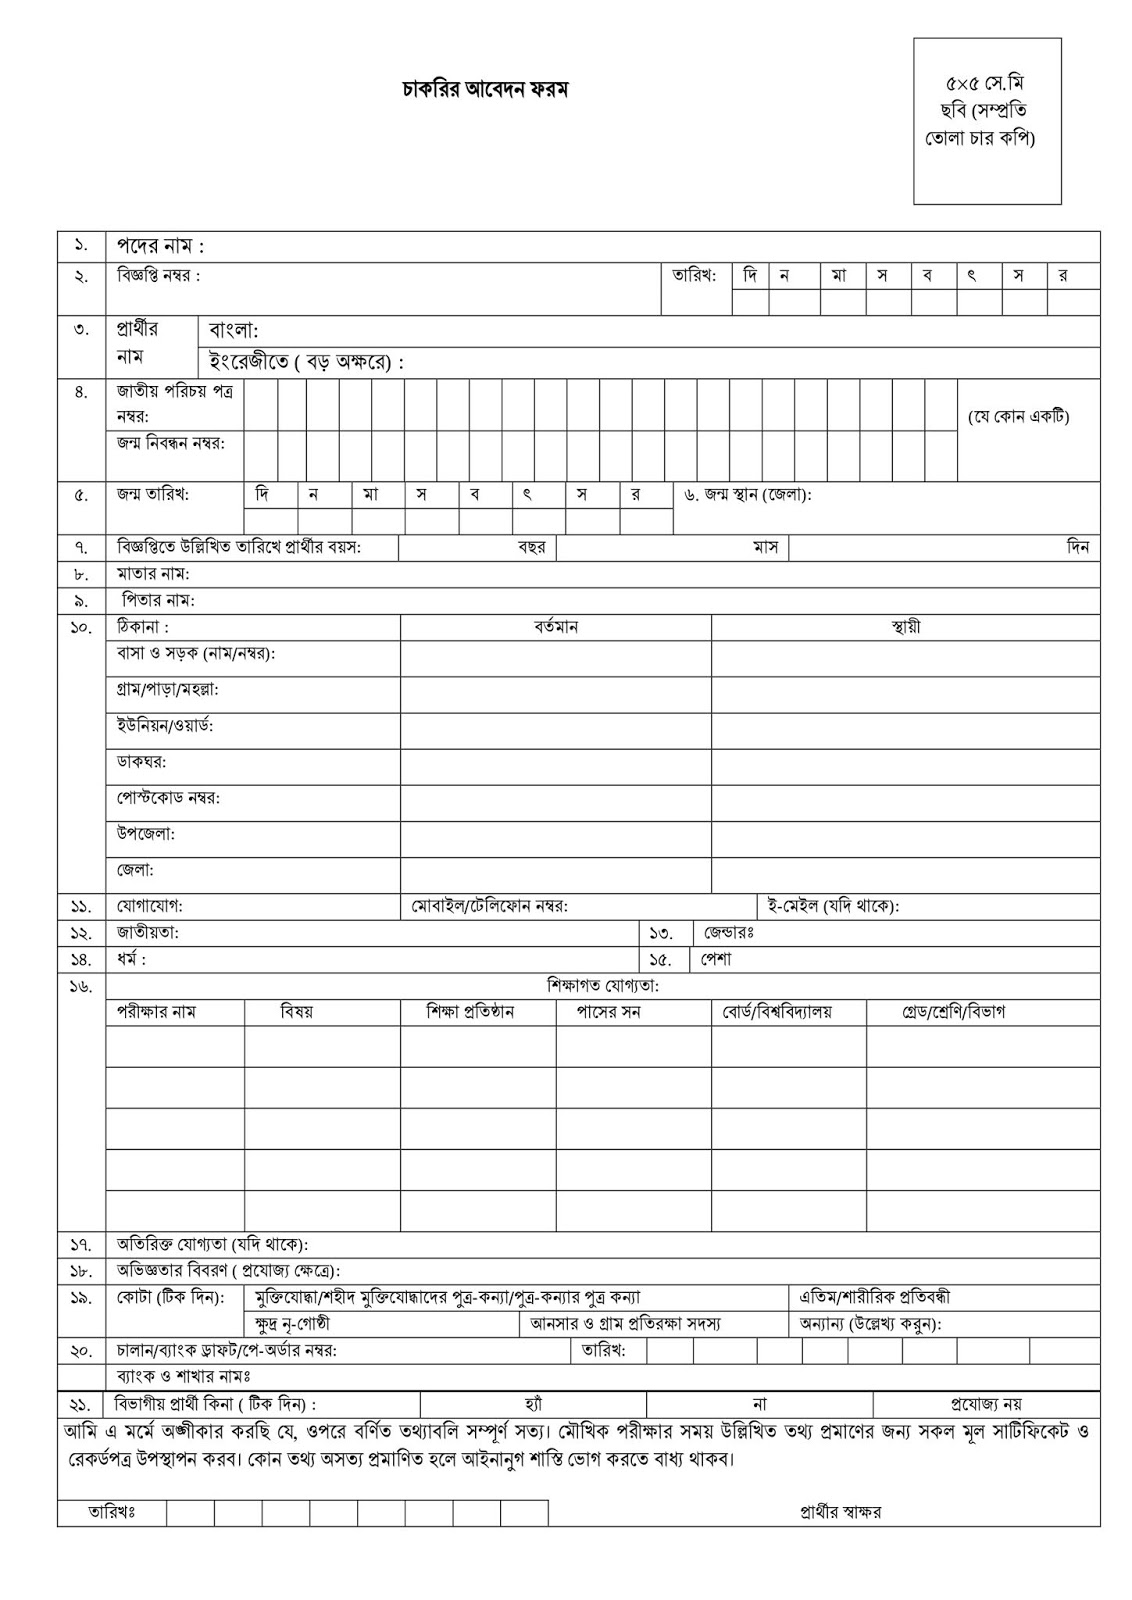 Mongla Port Authority (MPA) Job Application Form